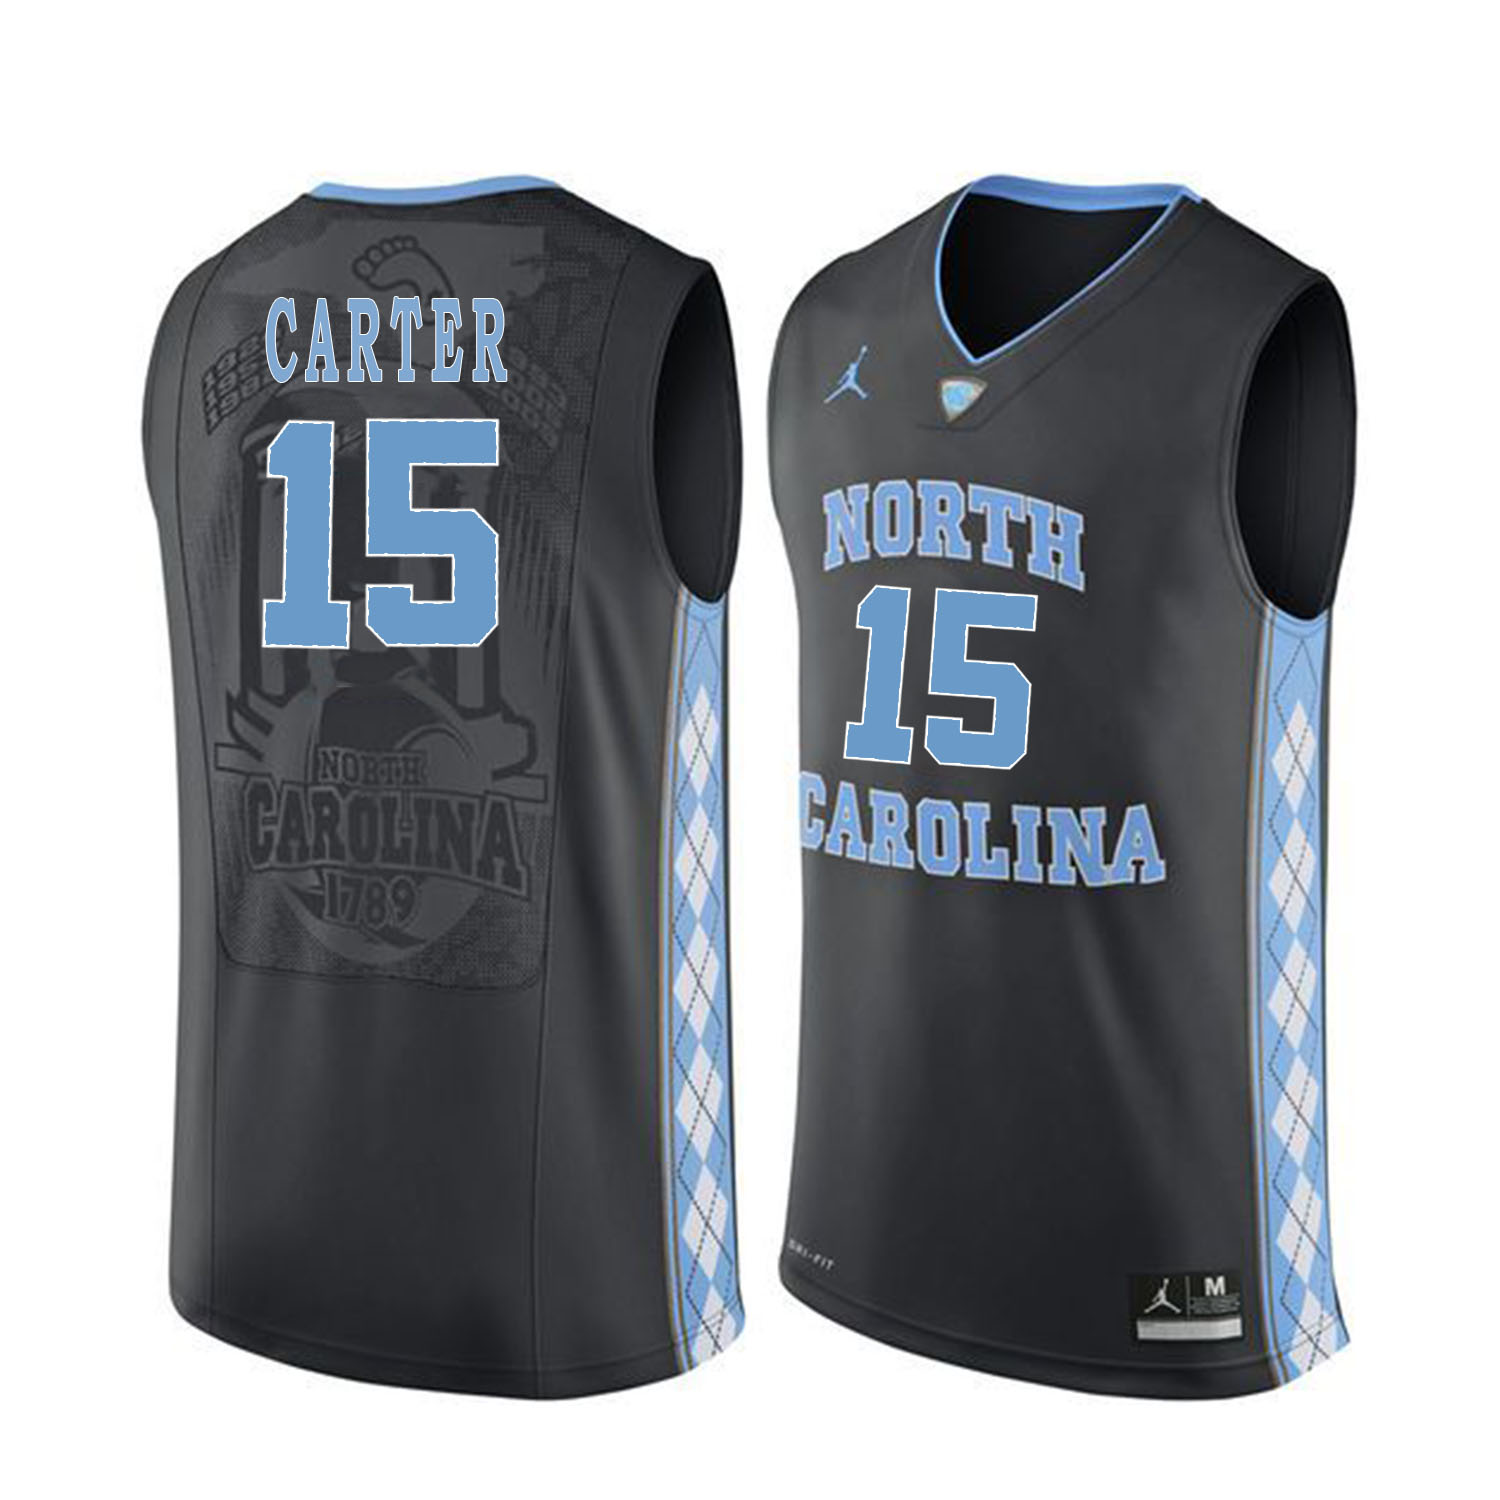 North Carolina Tar Heels 15 Vince Carter Black College Basketball Jersey